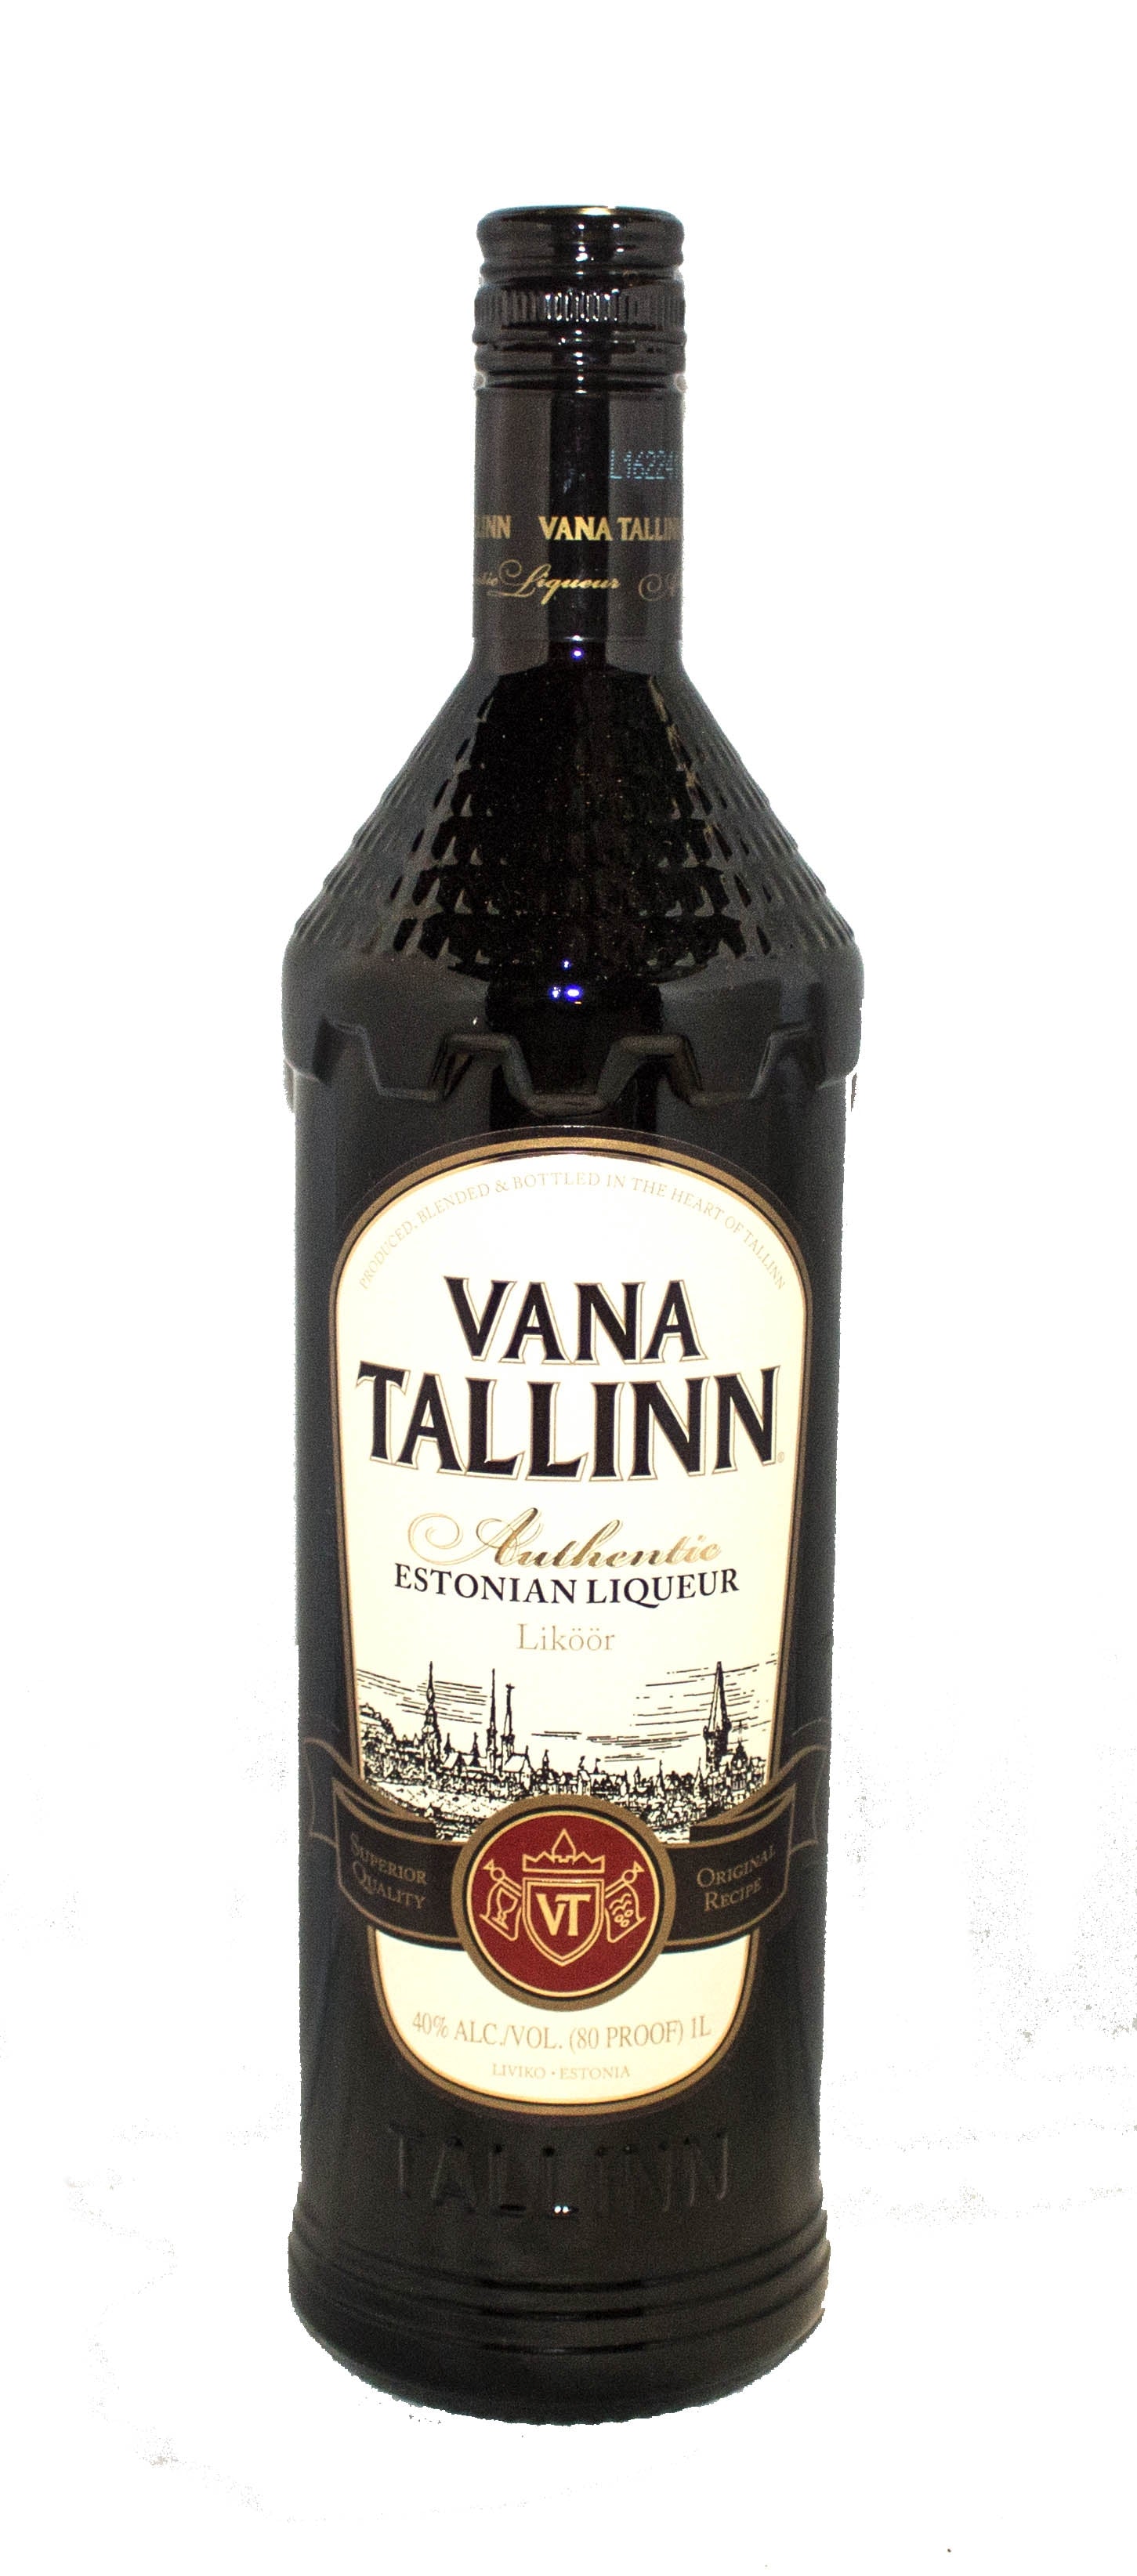 VANA TALLINN LIQUEUR ESTONIA 80PF 750ML - Remedy Liquor